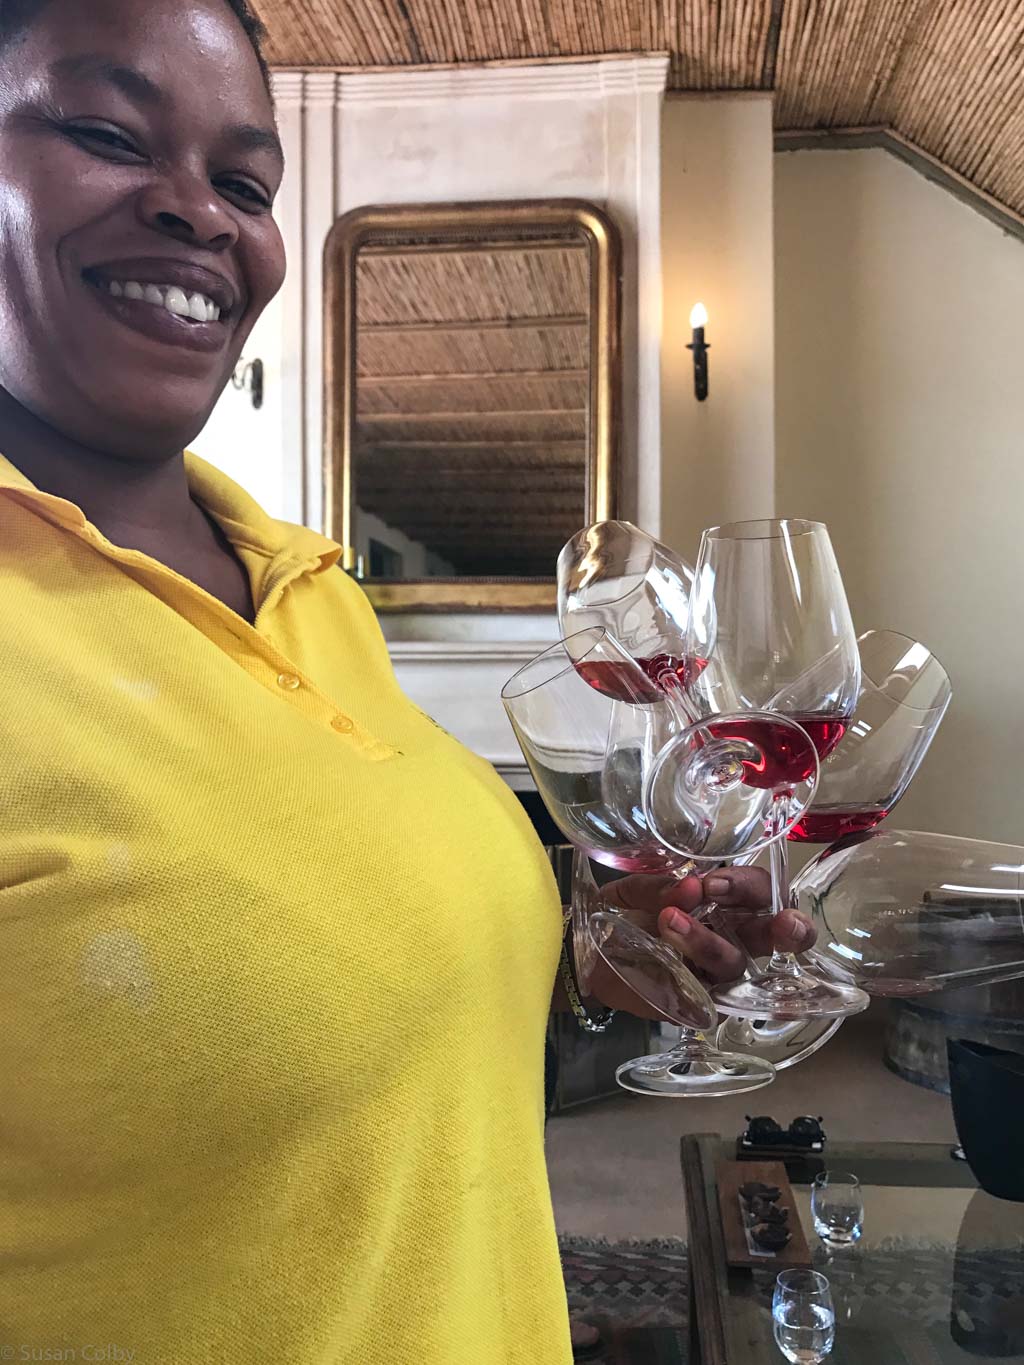 Our server at La Bri - note the clutch of wine glasses!